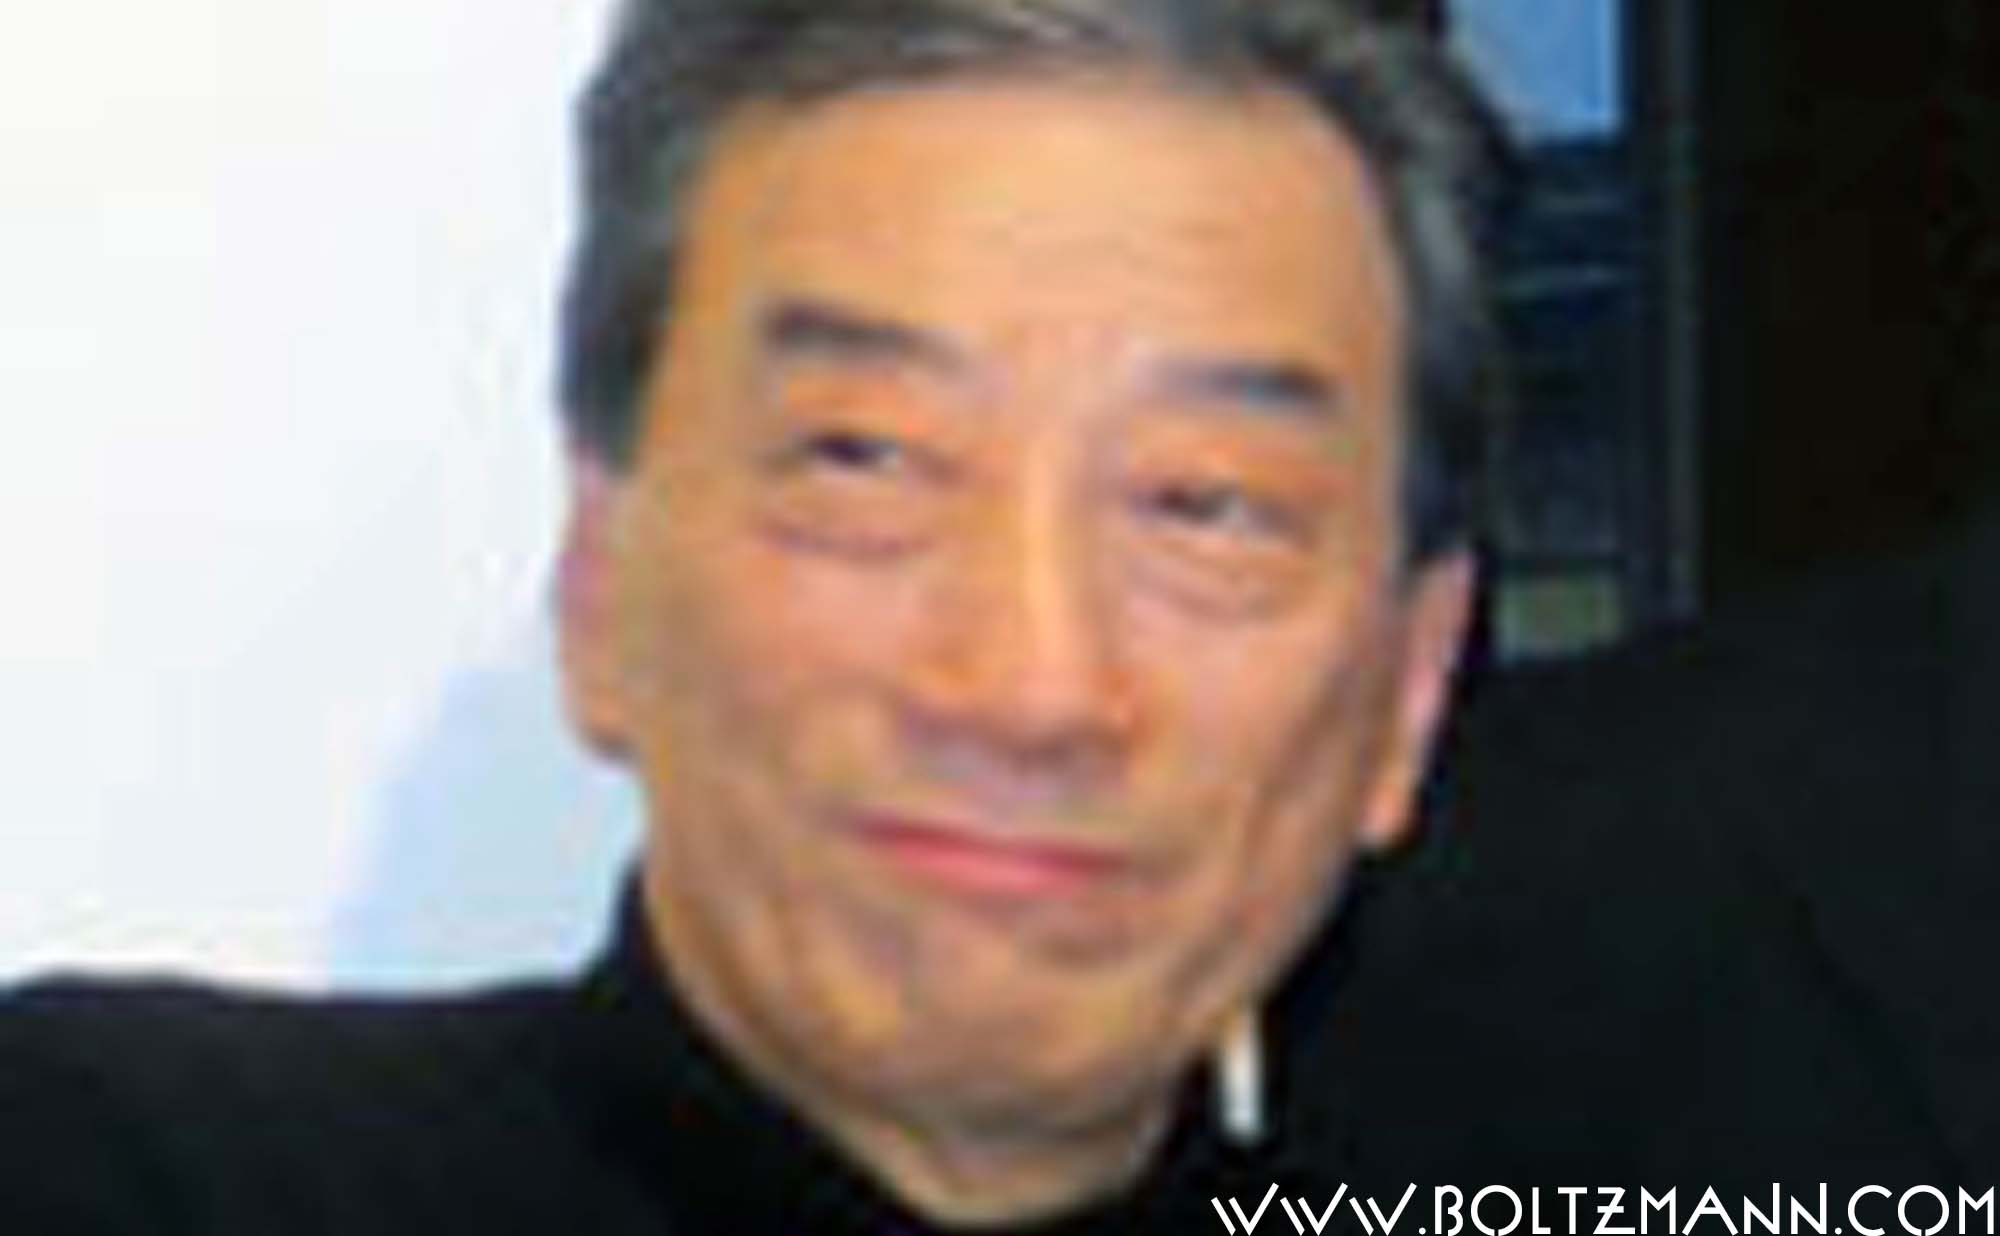 Groupthink can kill – Fukushima Accident Investigation Chairman Kiyoshi Kurokawa